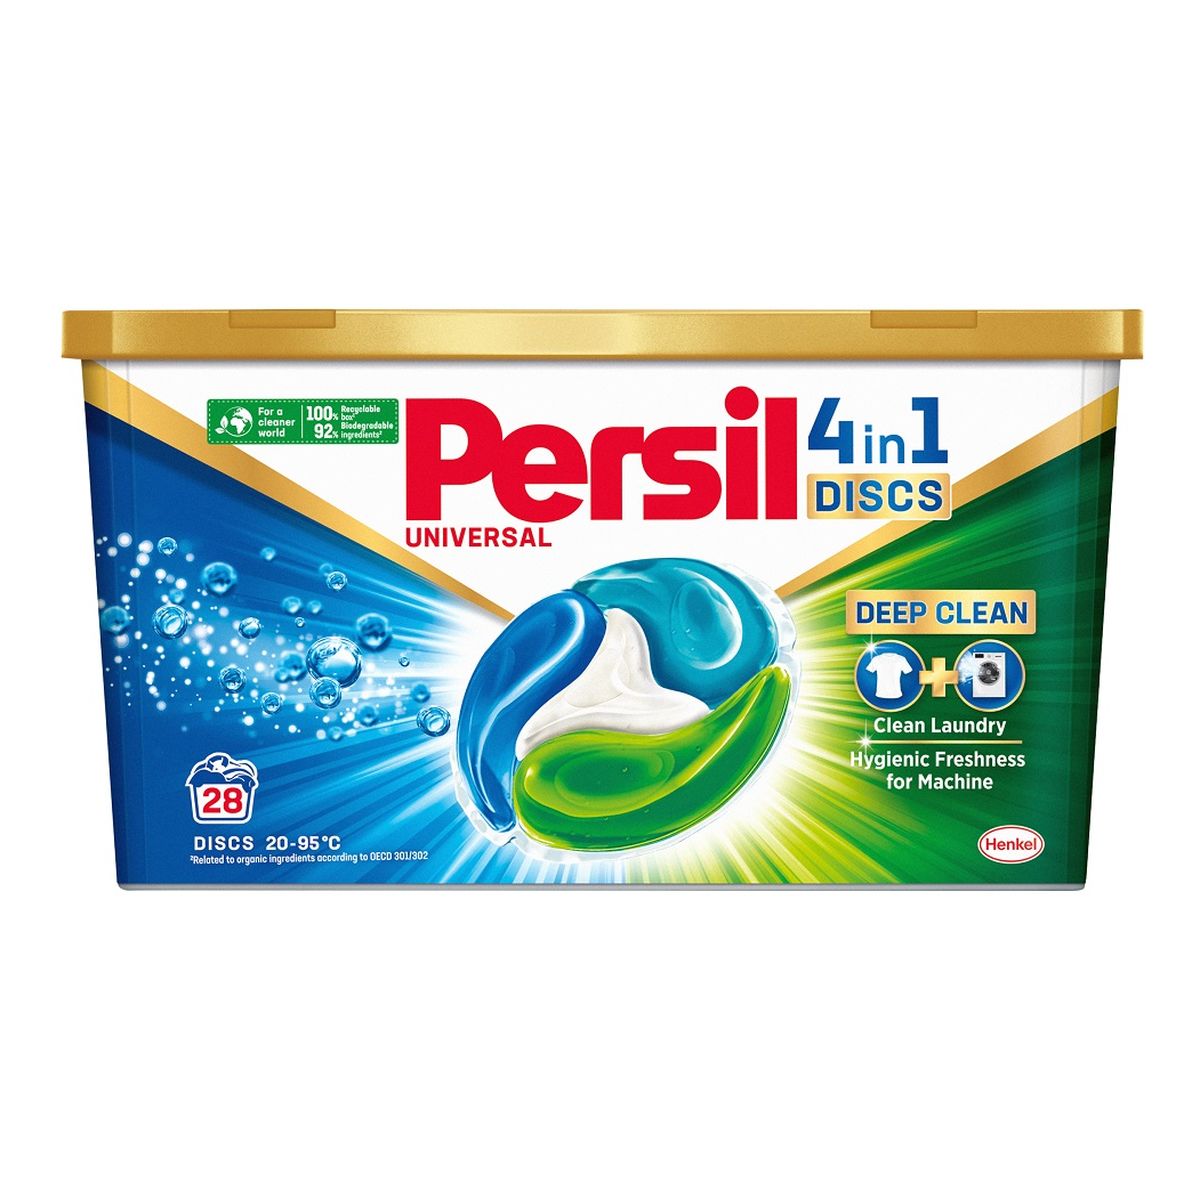 Persil Discs 4in1 universal kapsułki do prania 28szt.